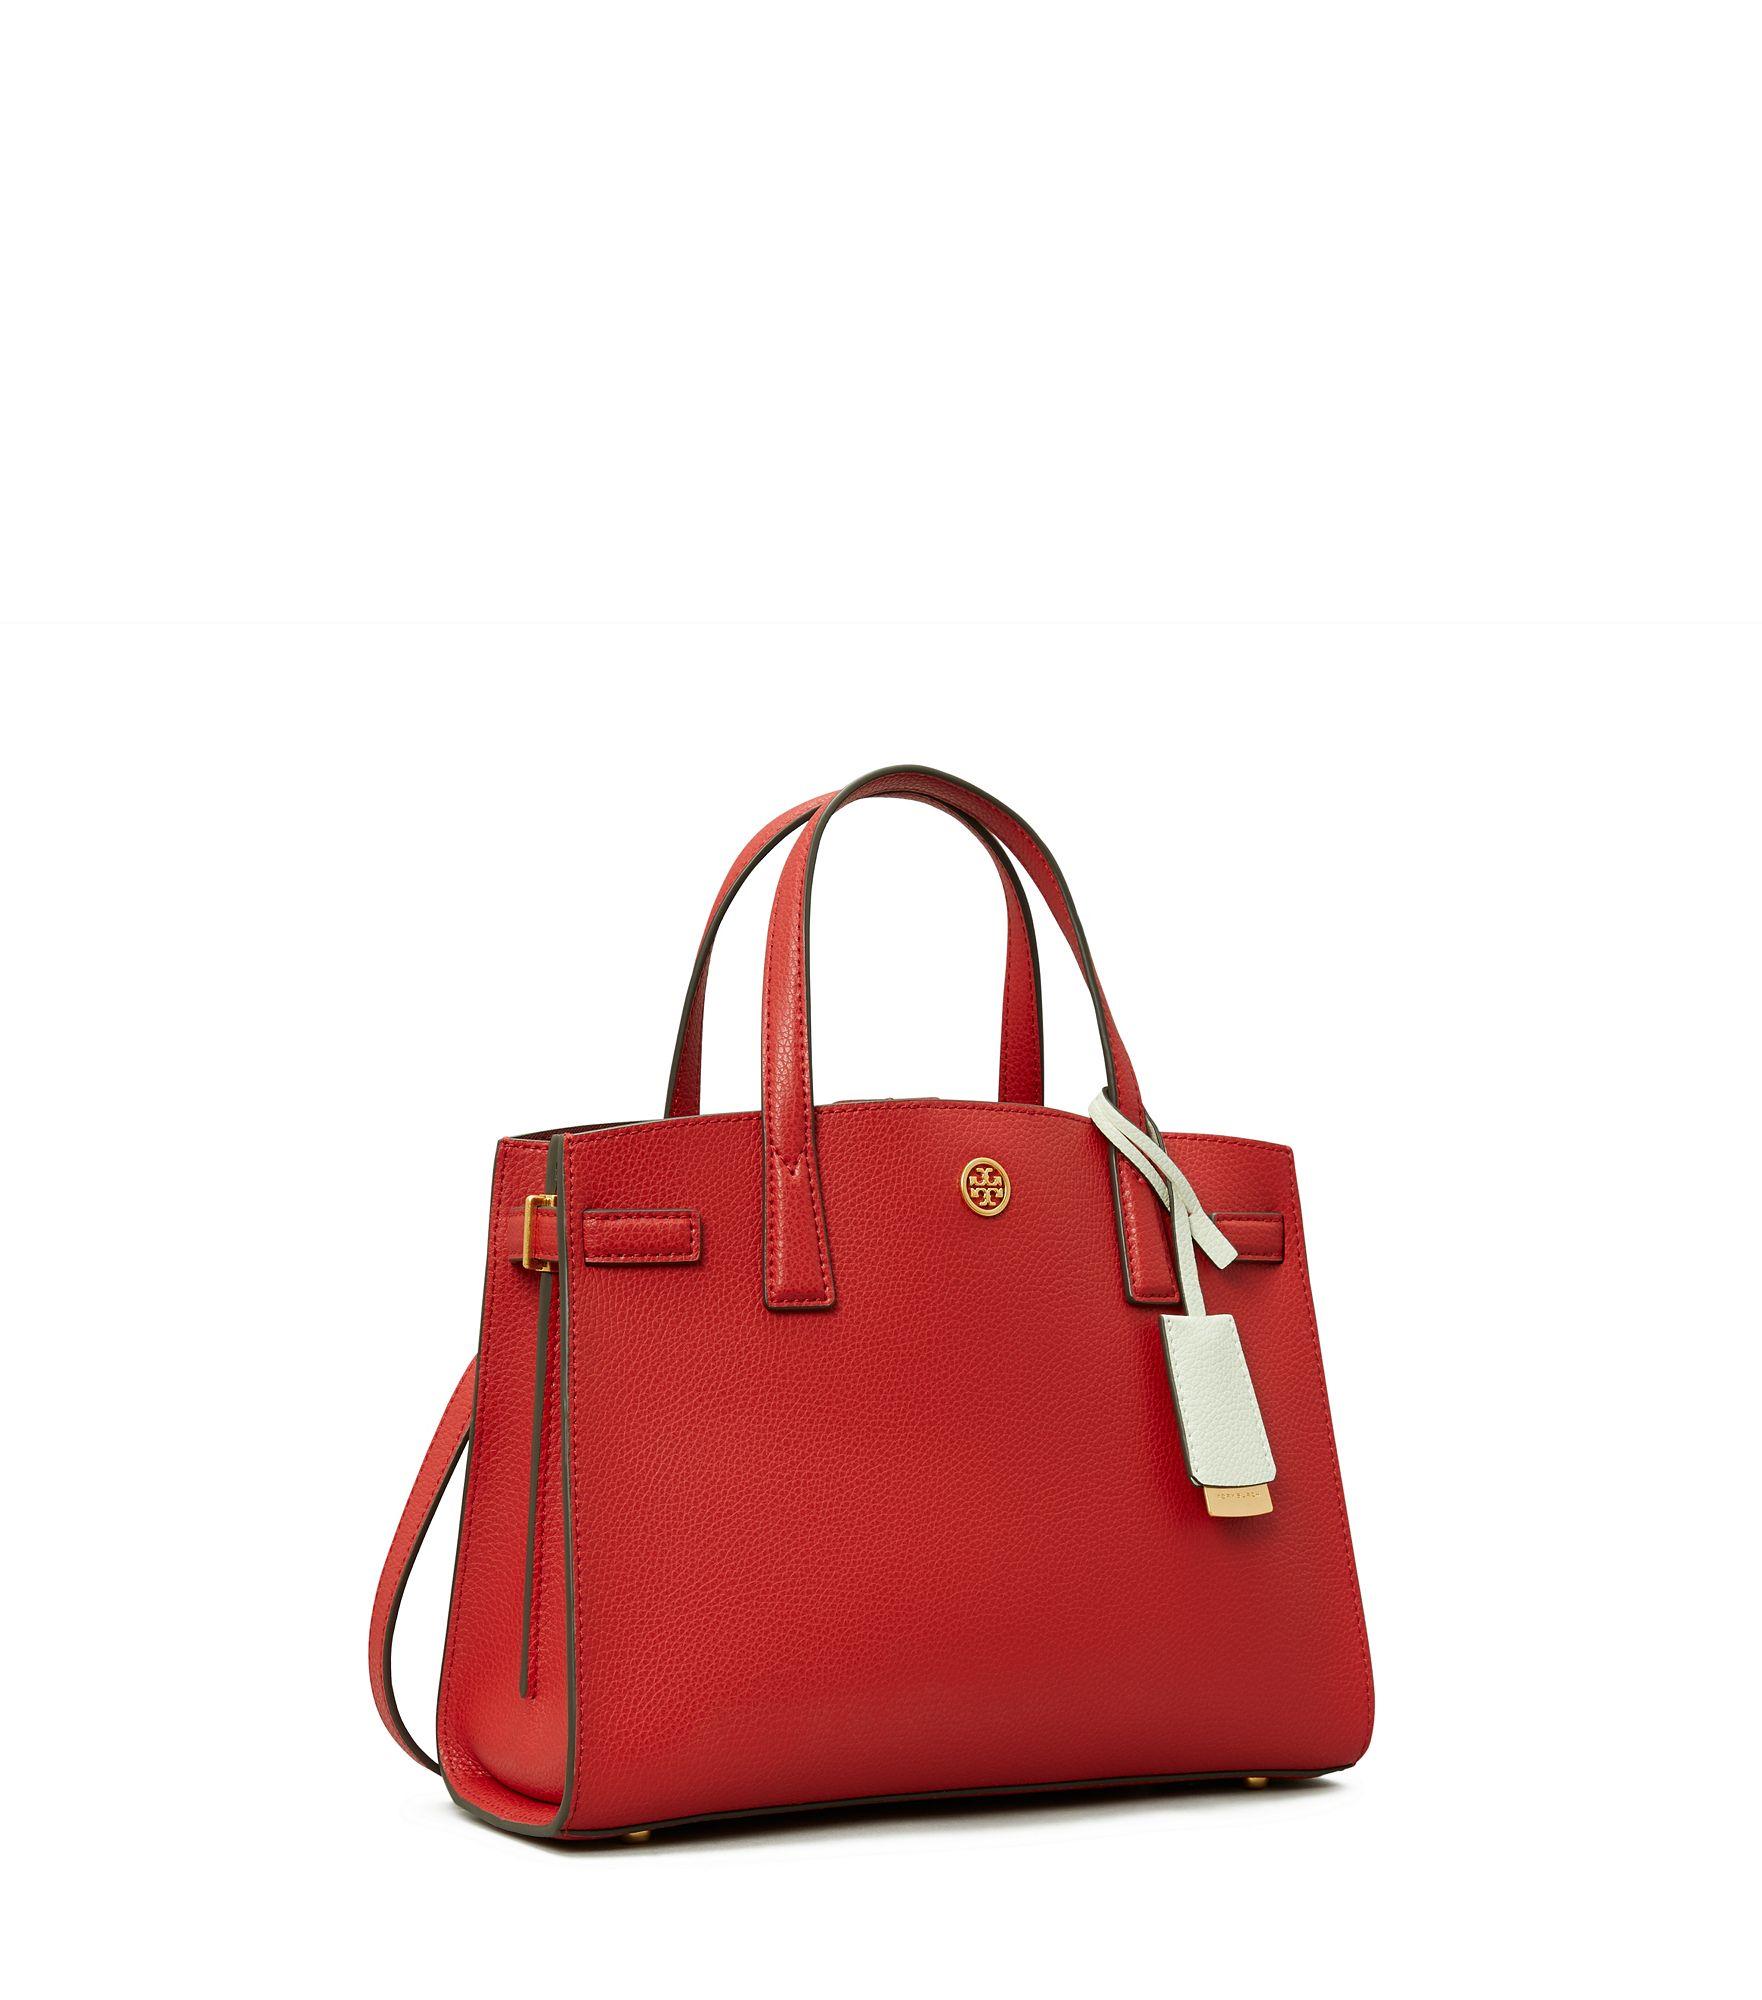 TORY BURCH: Walker handbag in grained leather - Red